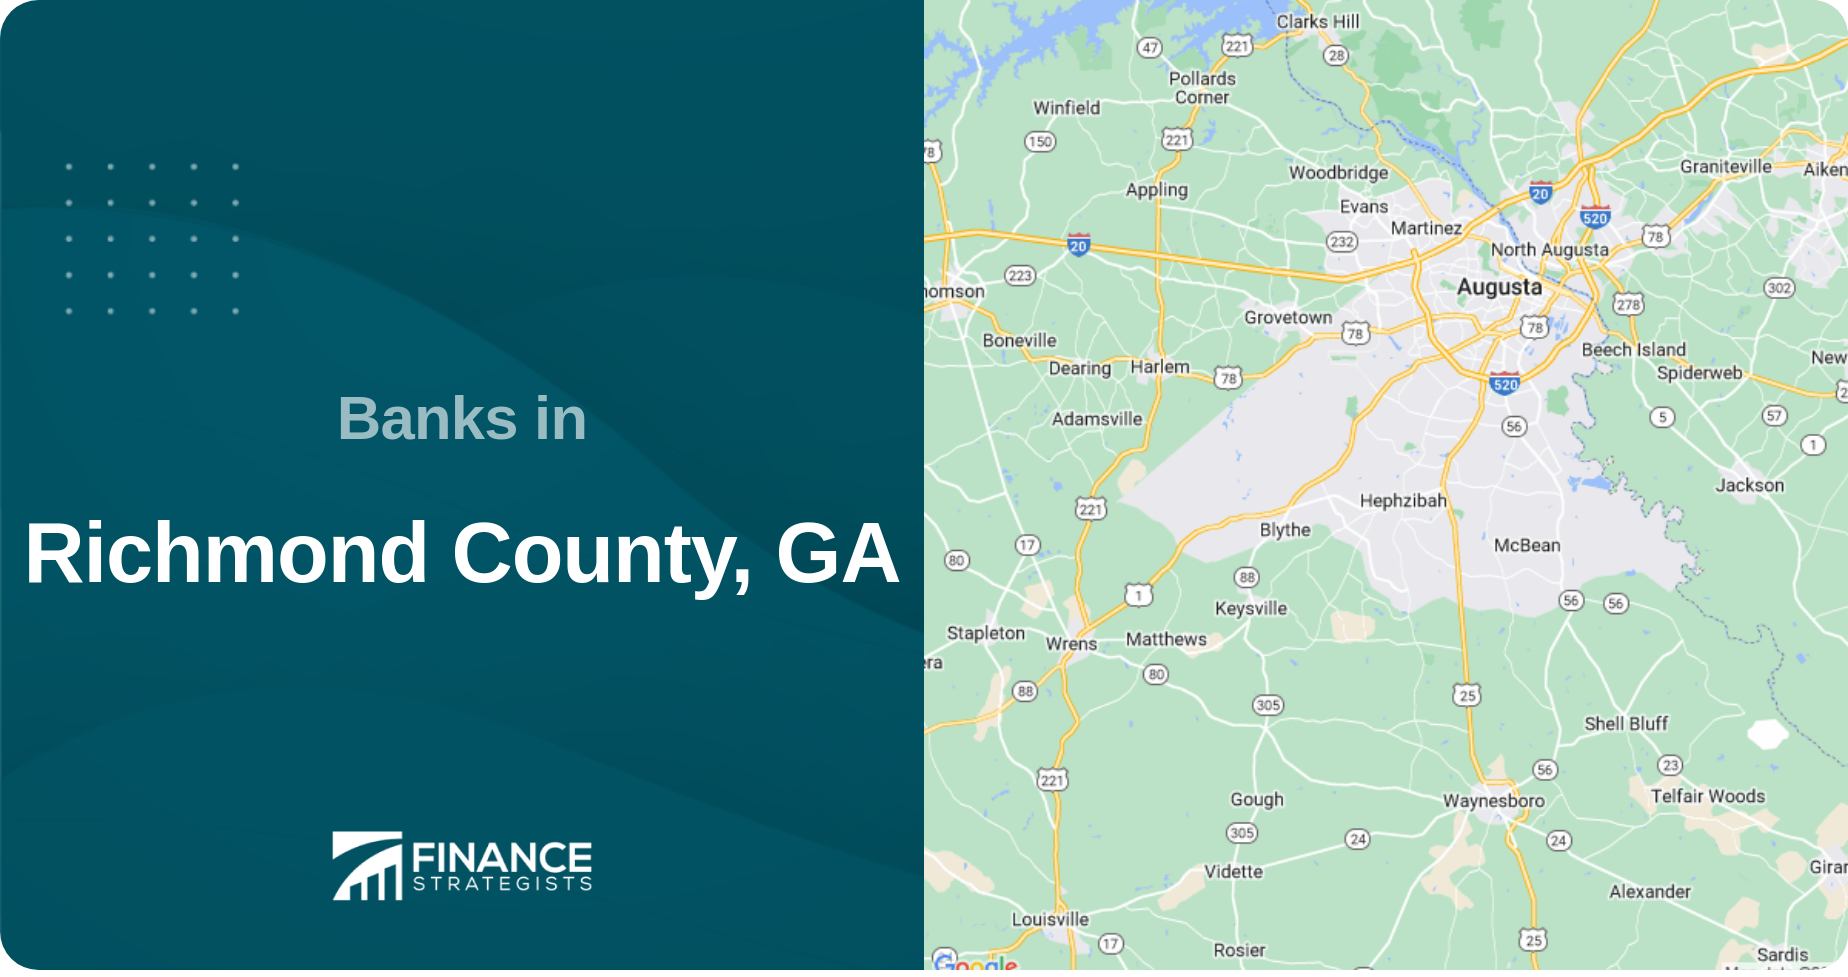 Banks in Richmond County, GA